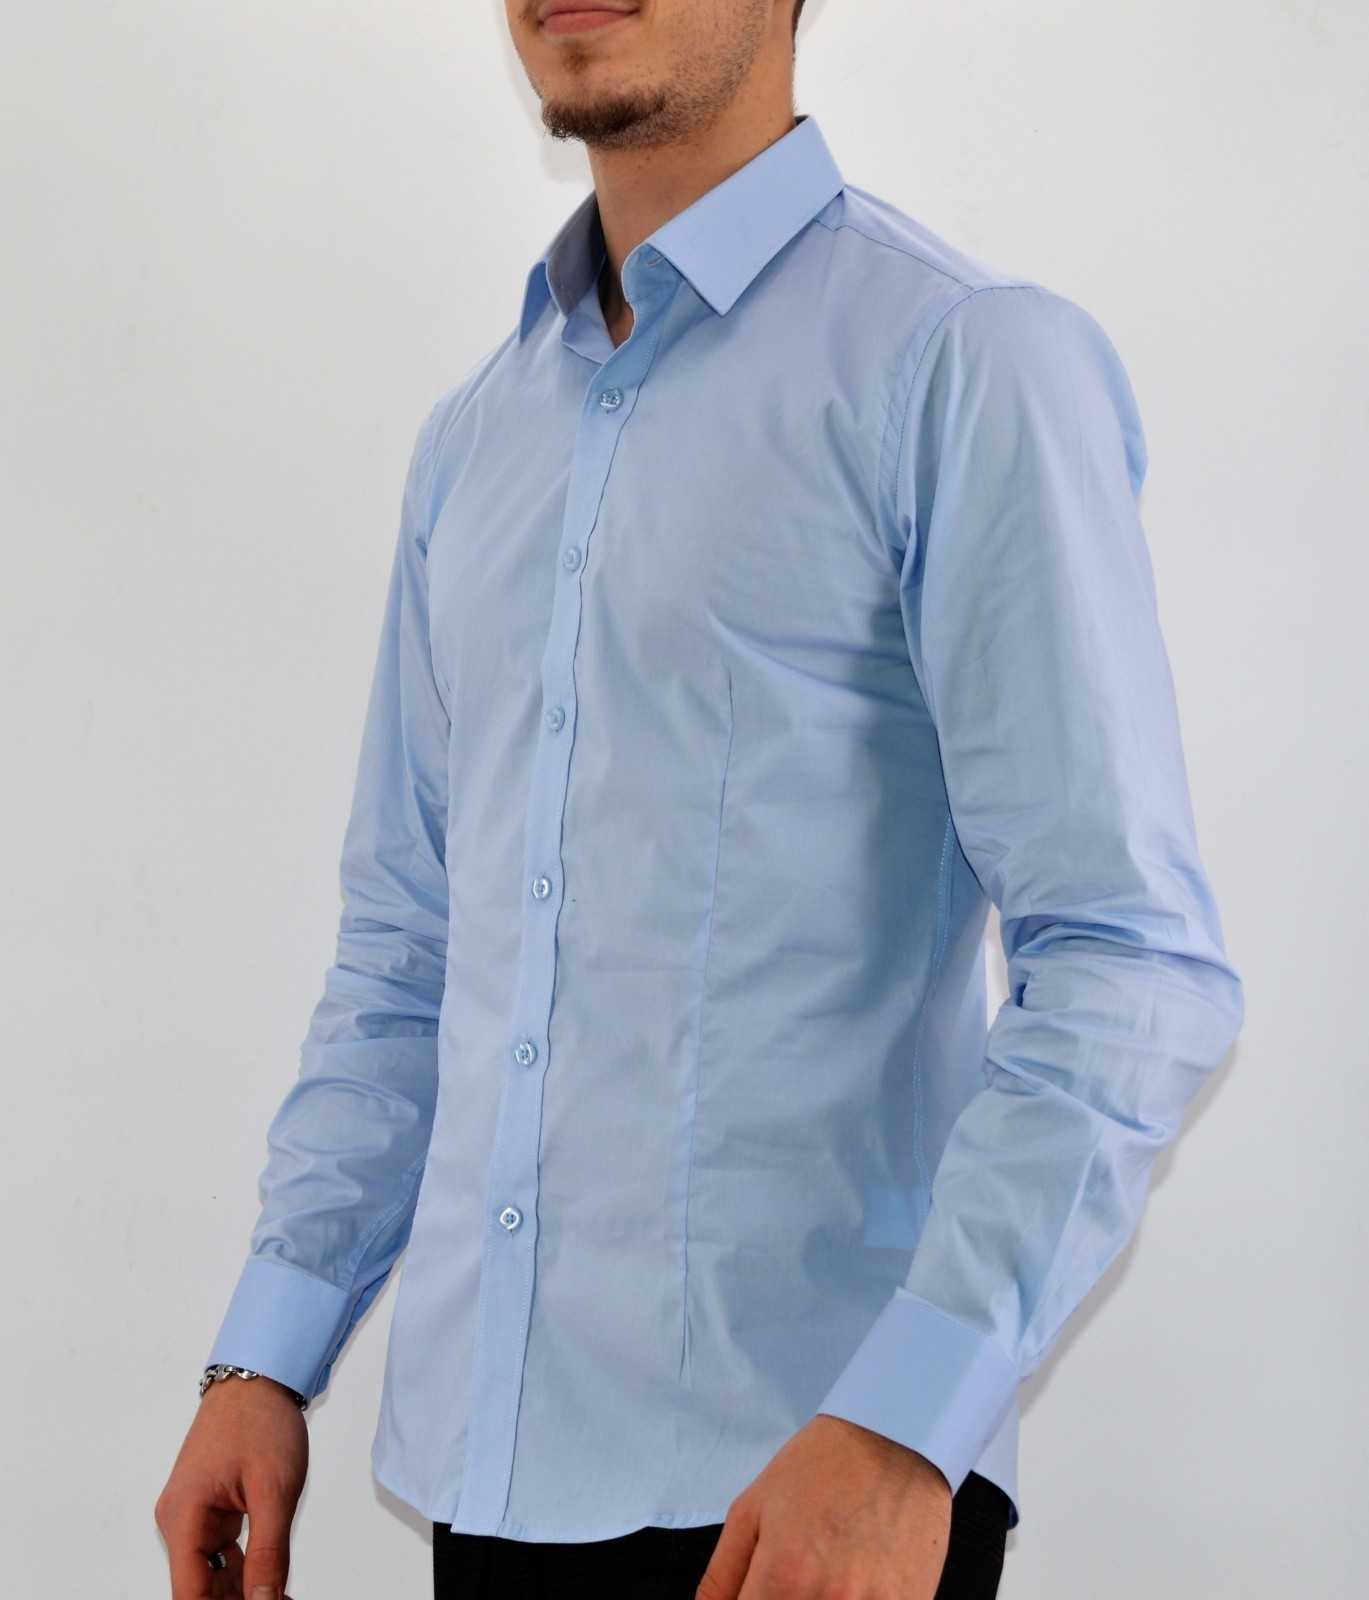 Chemise homme bleu ciel - Mode Urbaine